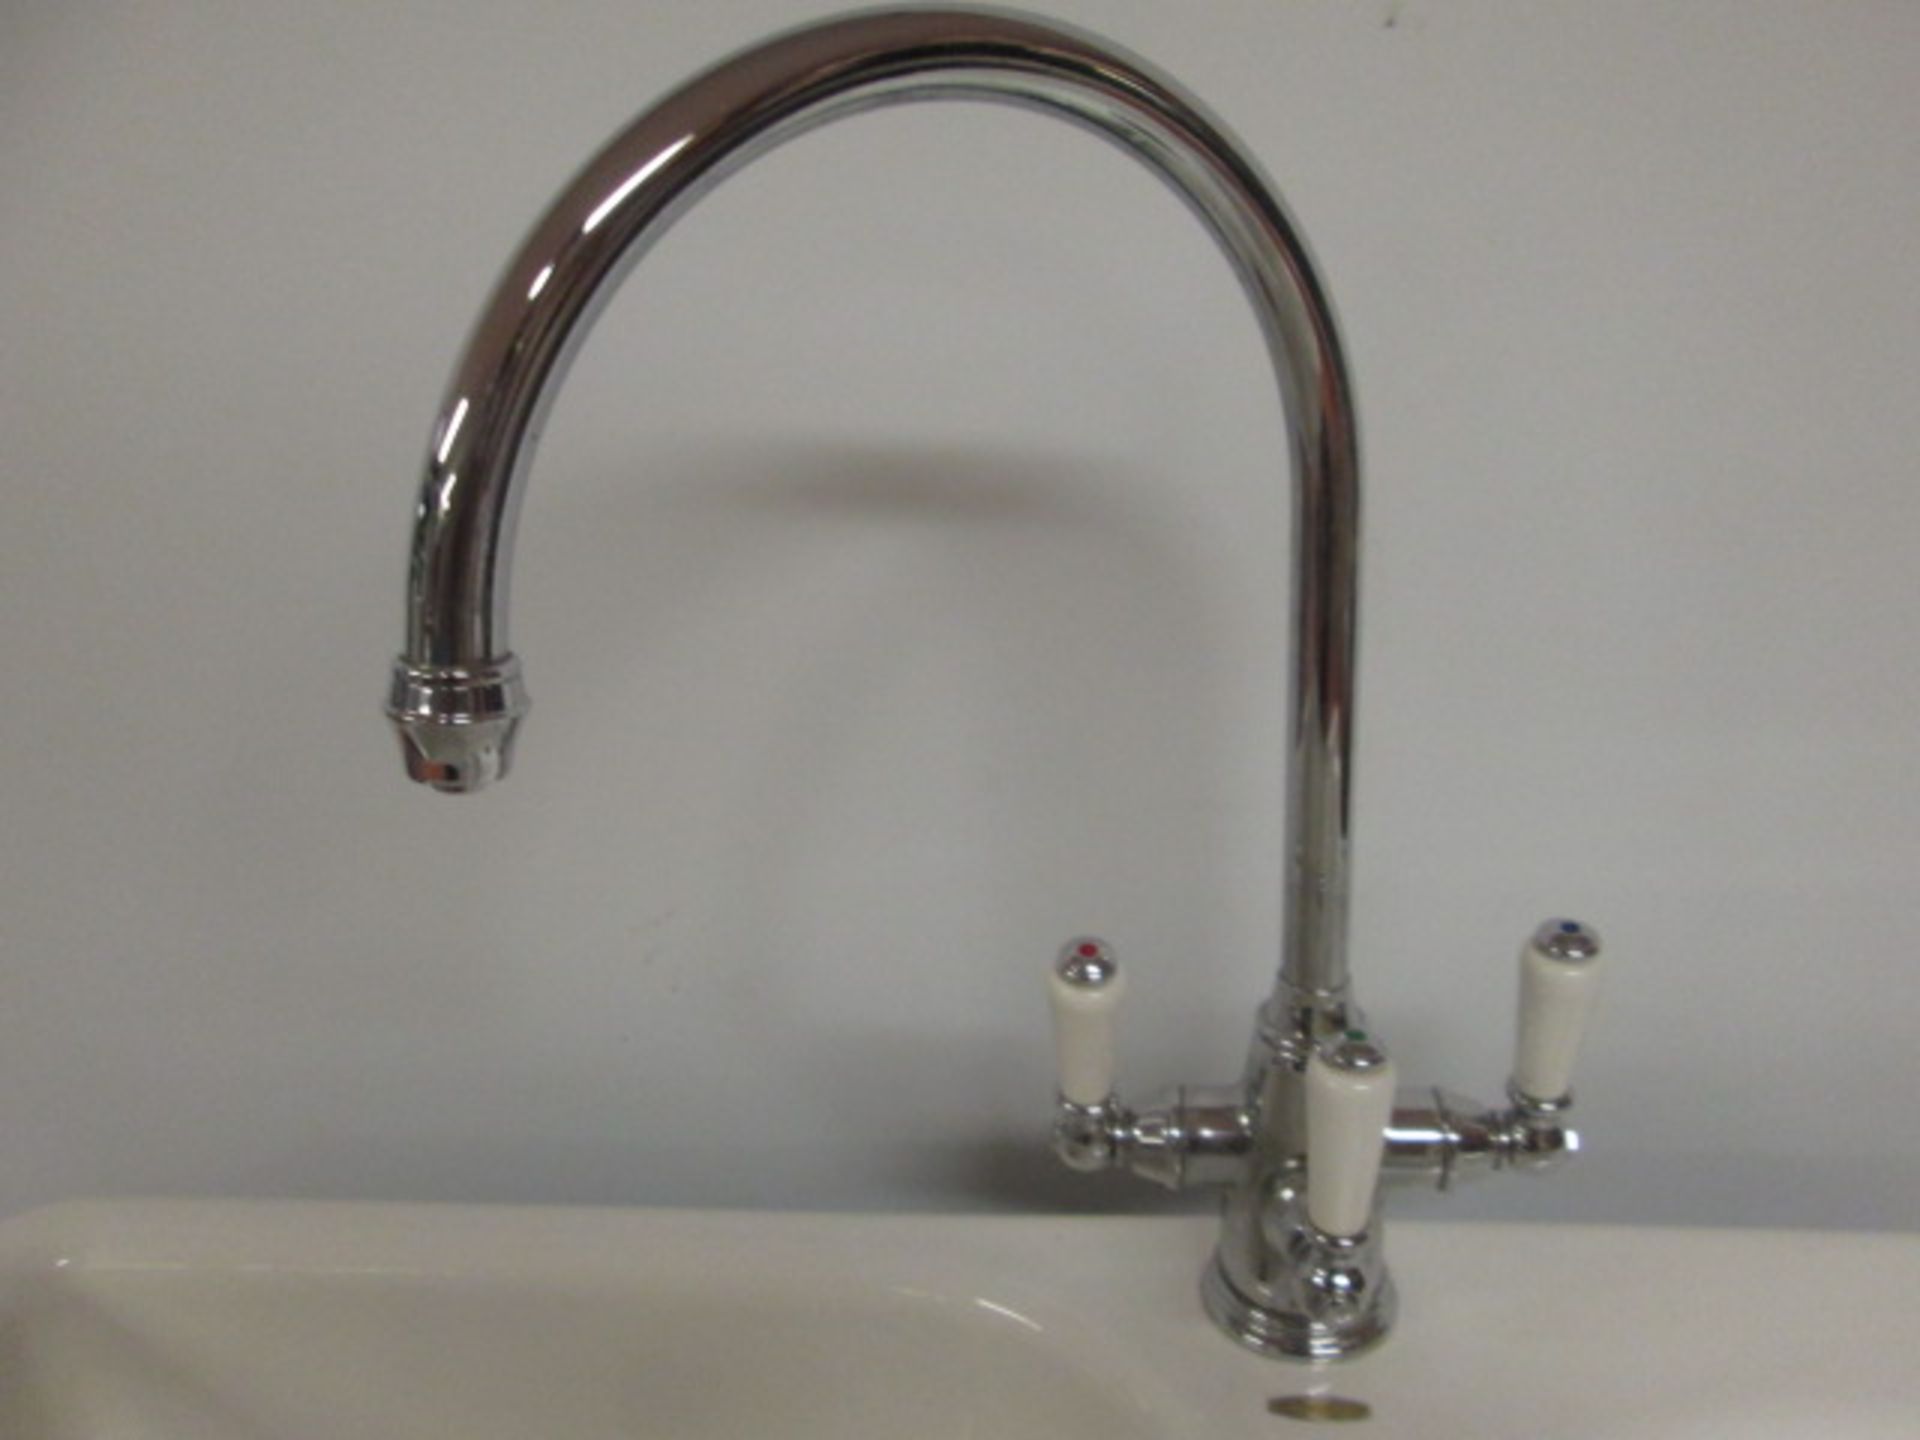 Kohler Cast Iron/Ceramic Double Sink with Monoblock lever taps - Image 4 of 4